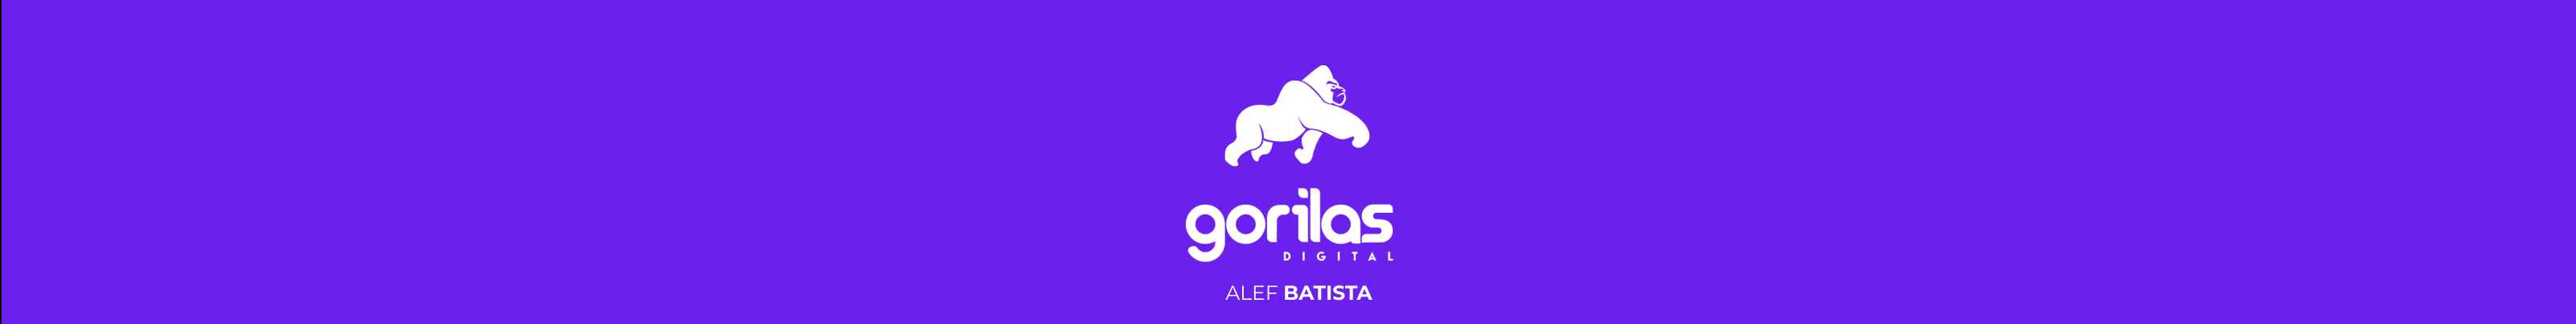 GORILAS Digital のプロファイルバナー